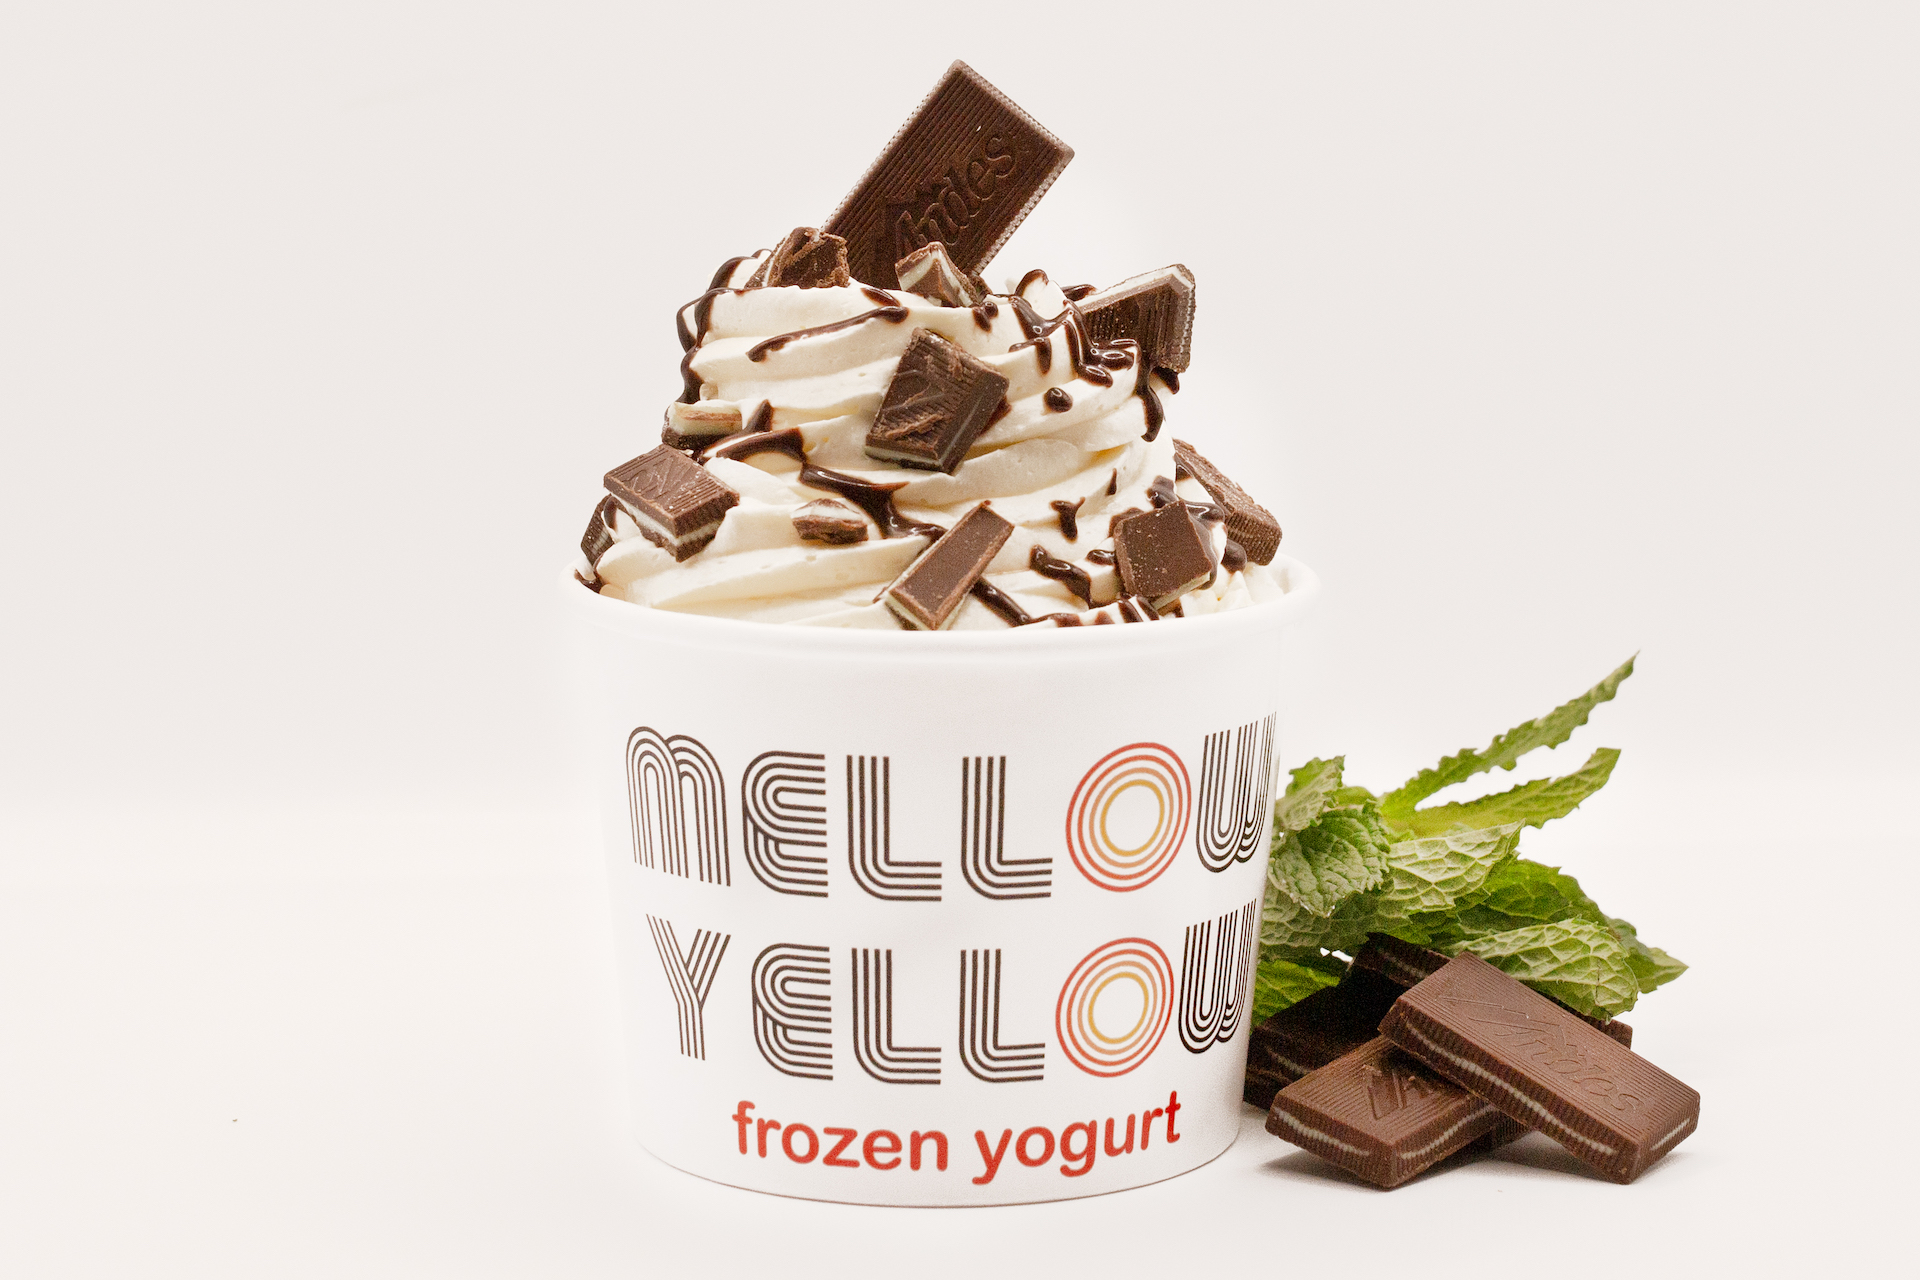 Mellow Yellow Frozen Yogurt chocolate